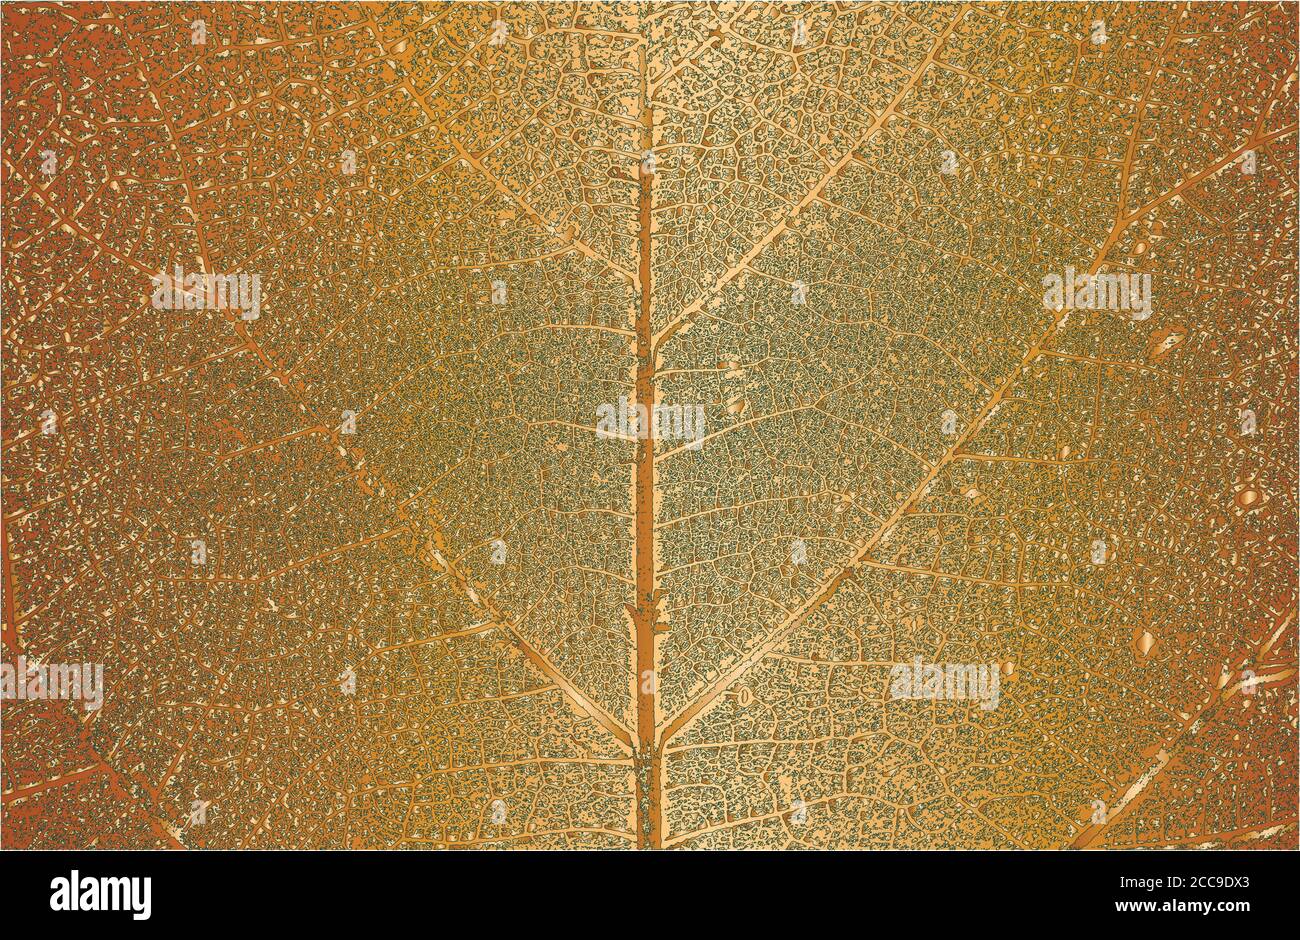 Distress tree leaves, leaflet texture on golden background. Black and white grunge background. EPS8 vector illustration. Stock Vector